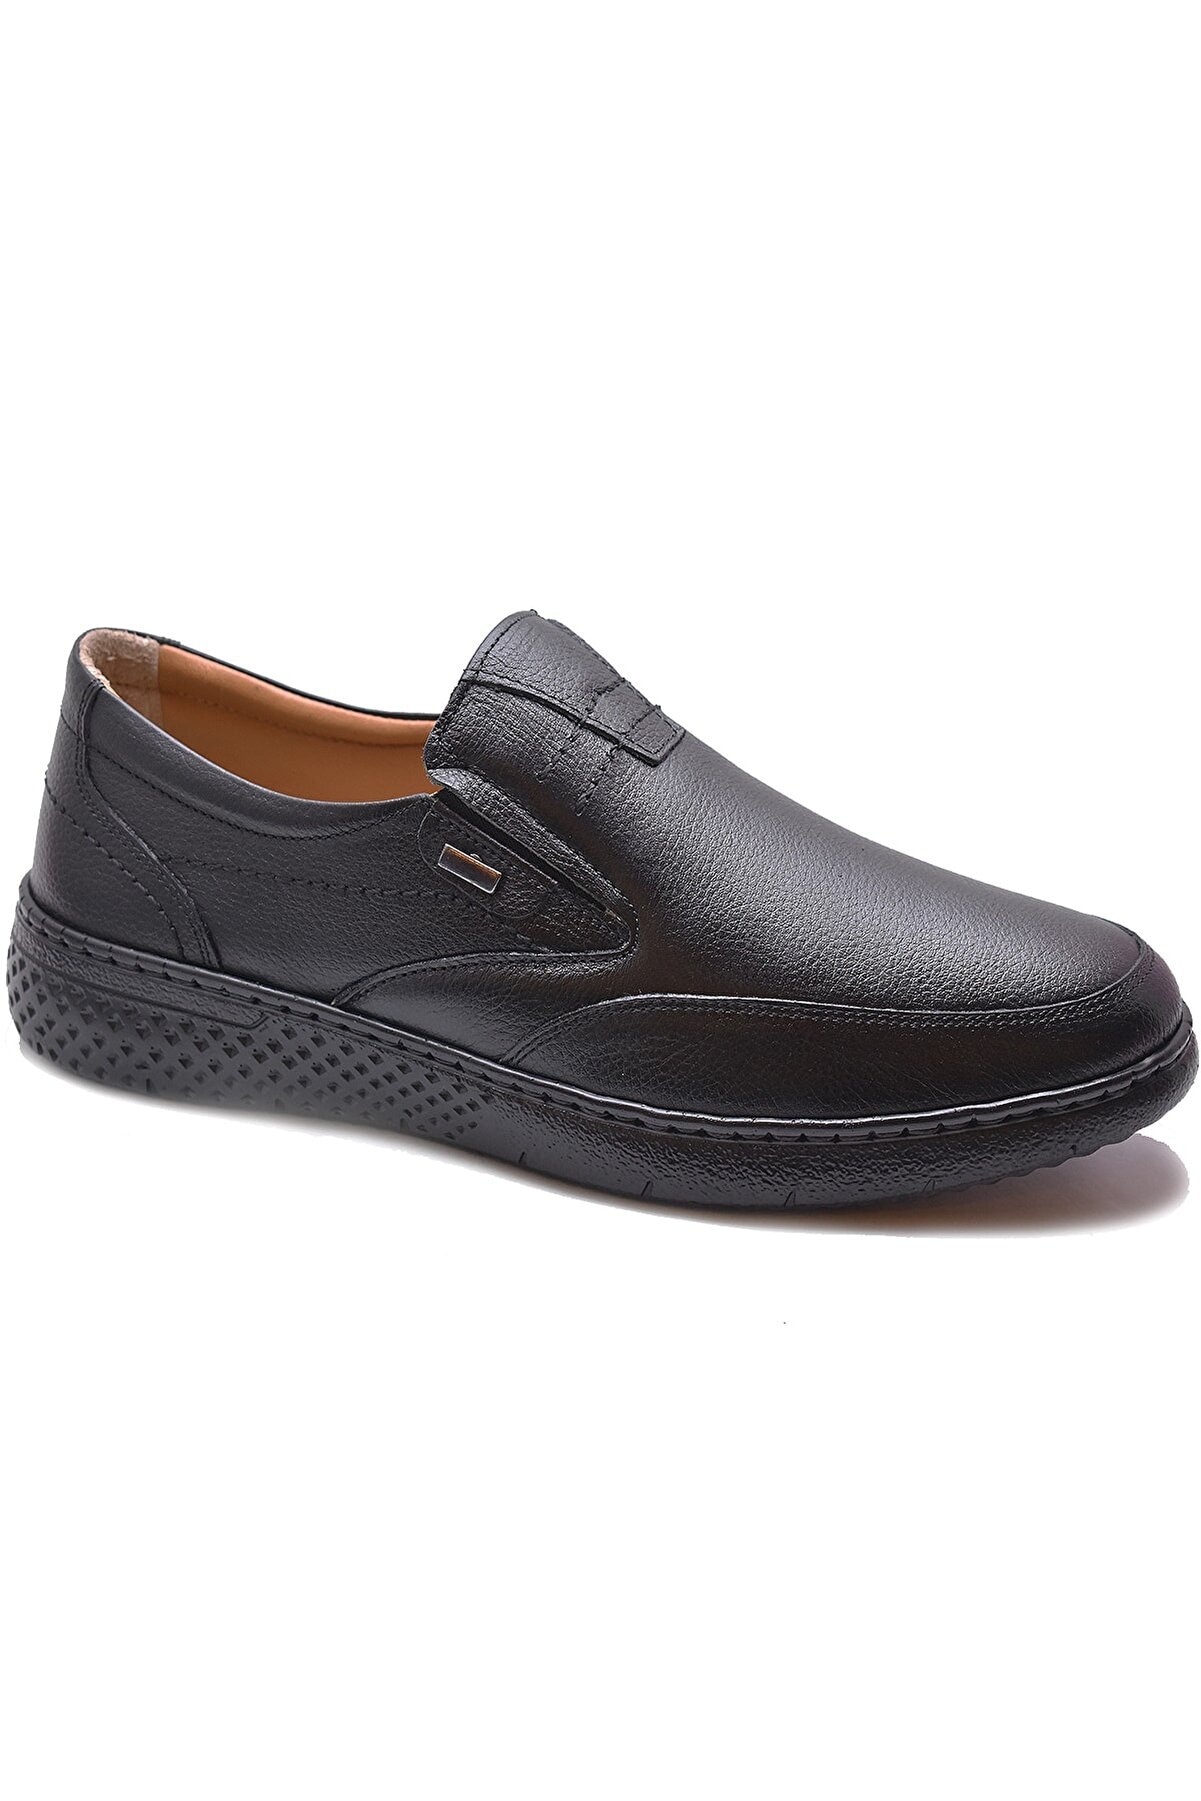 Men Orthopedic Soft Geniue Leather Black Shoes, Men Genuine Leather Business Dress Shoes, Brown Casual Winter Social Footwear